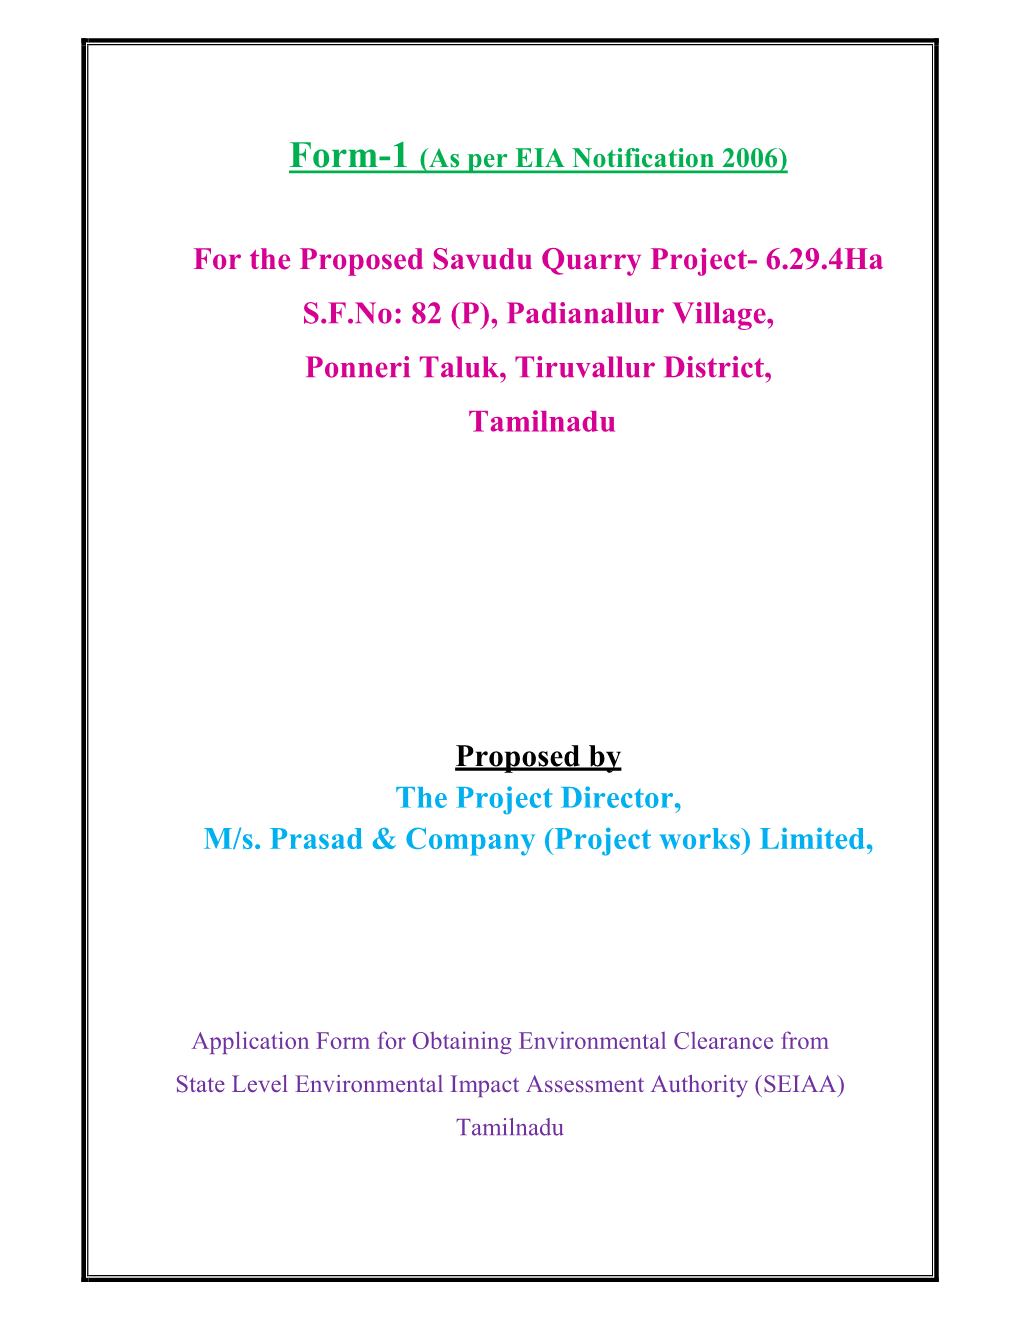 For the Proposed Savudu Quarry Project- 6.29.4Ha S.F.No: 82 (P), Padianallur Village, Ponneri Taluk, Tiruvallur District